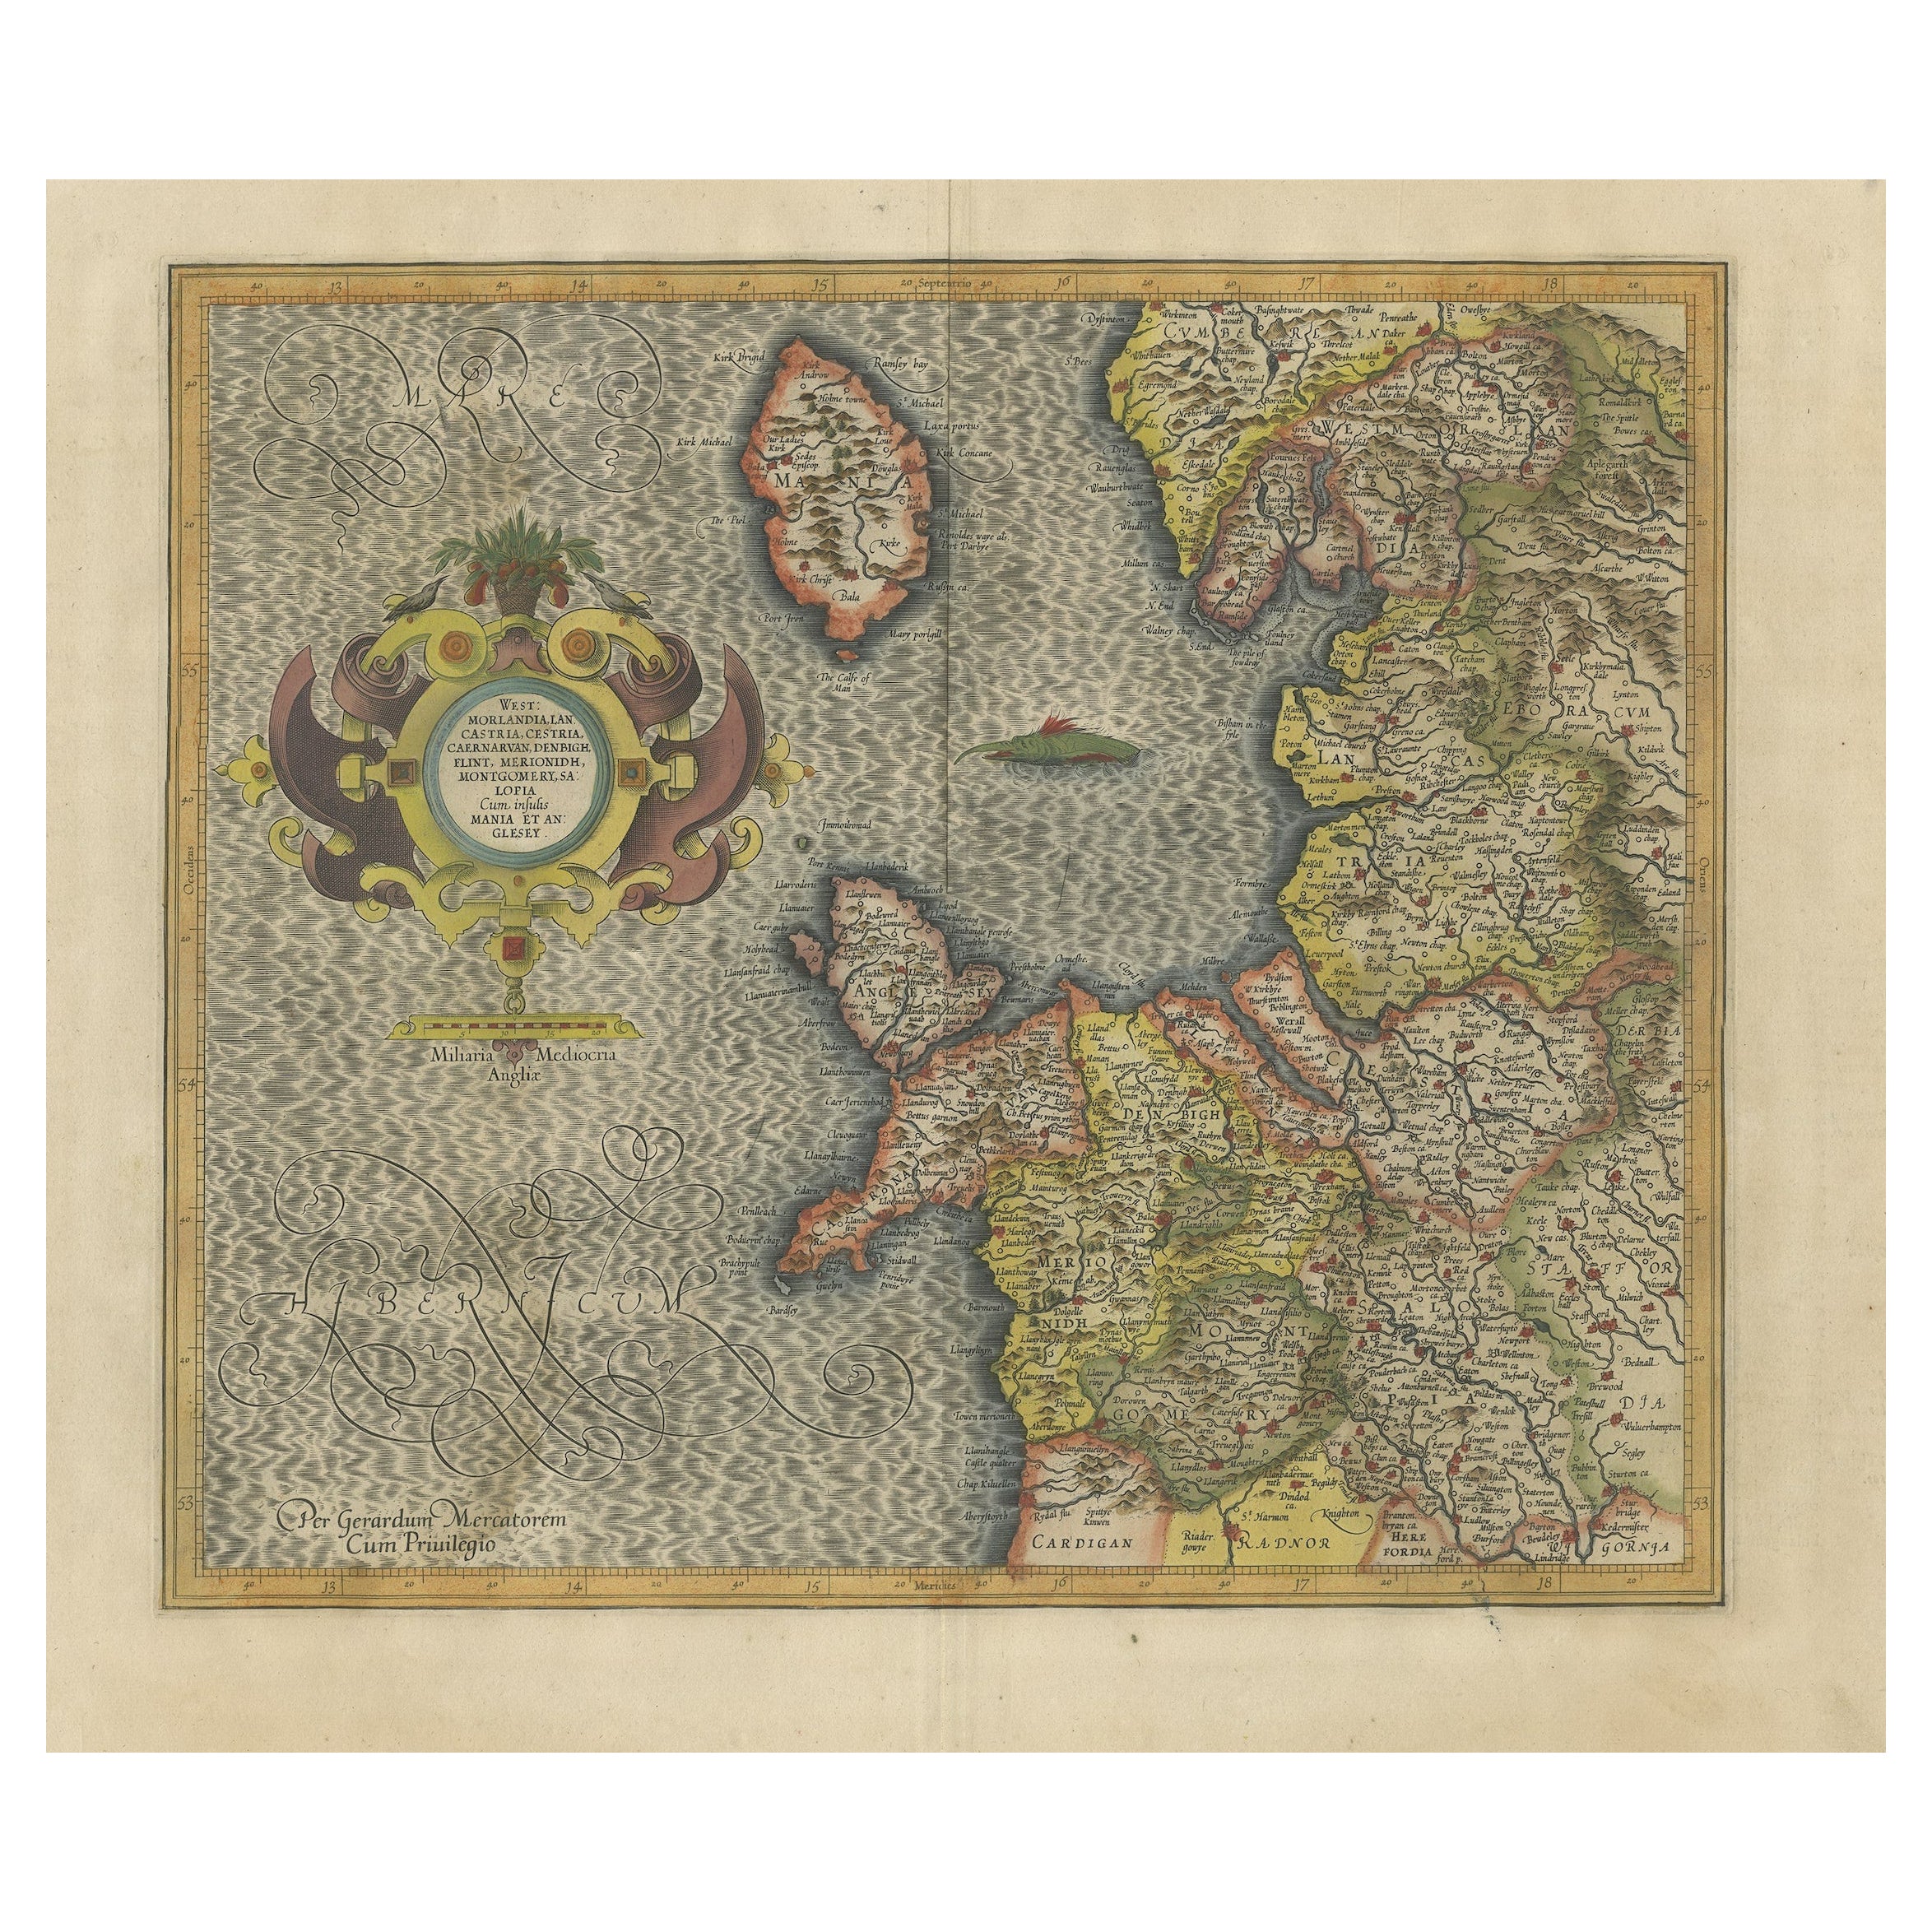 Antique Map of England by Mercator/Hondius, circa 1600